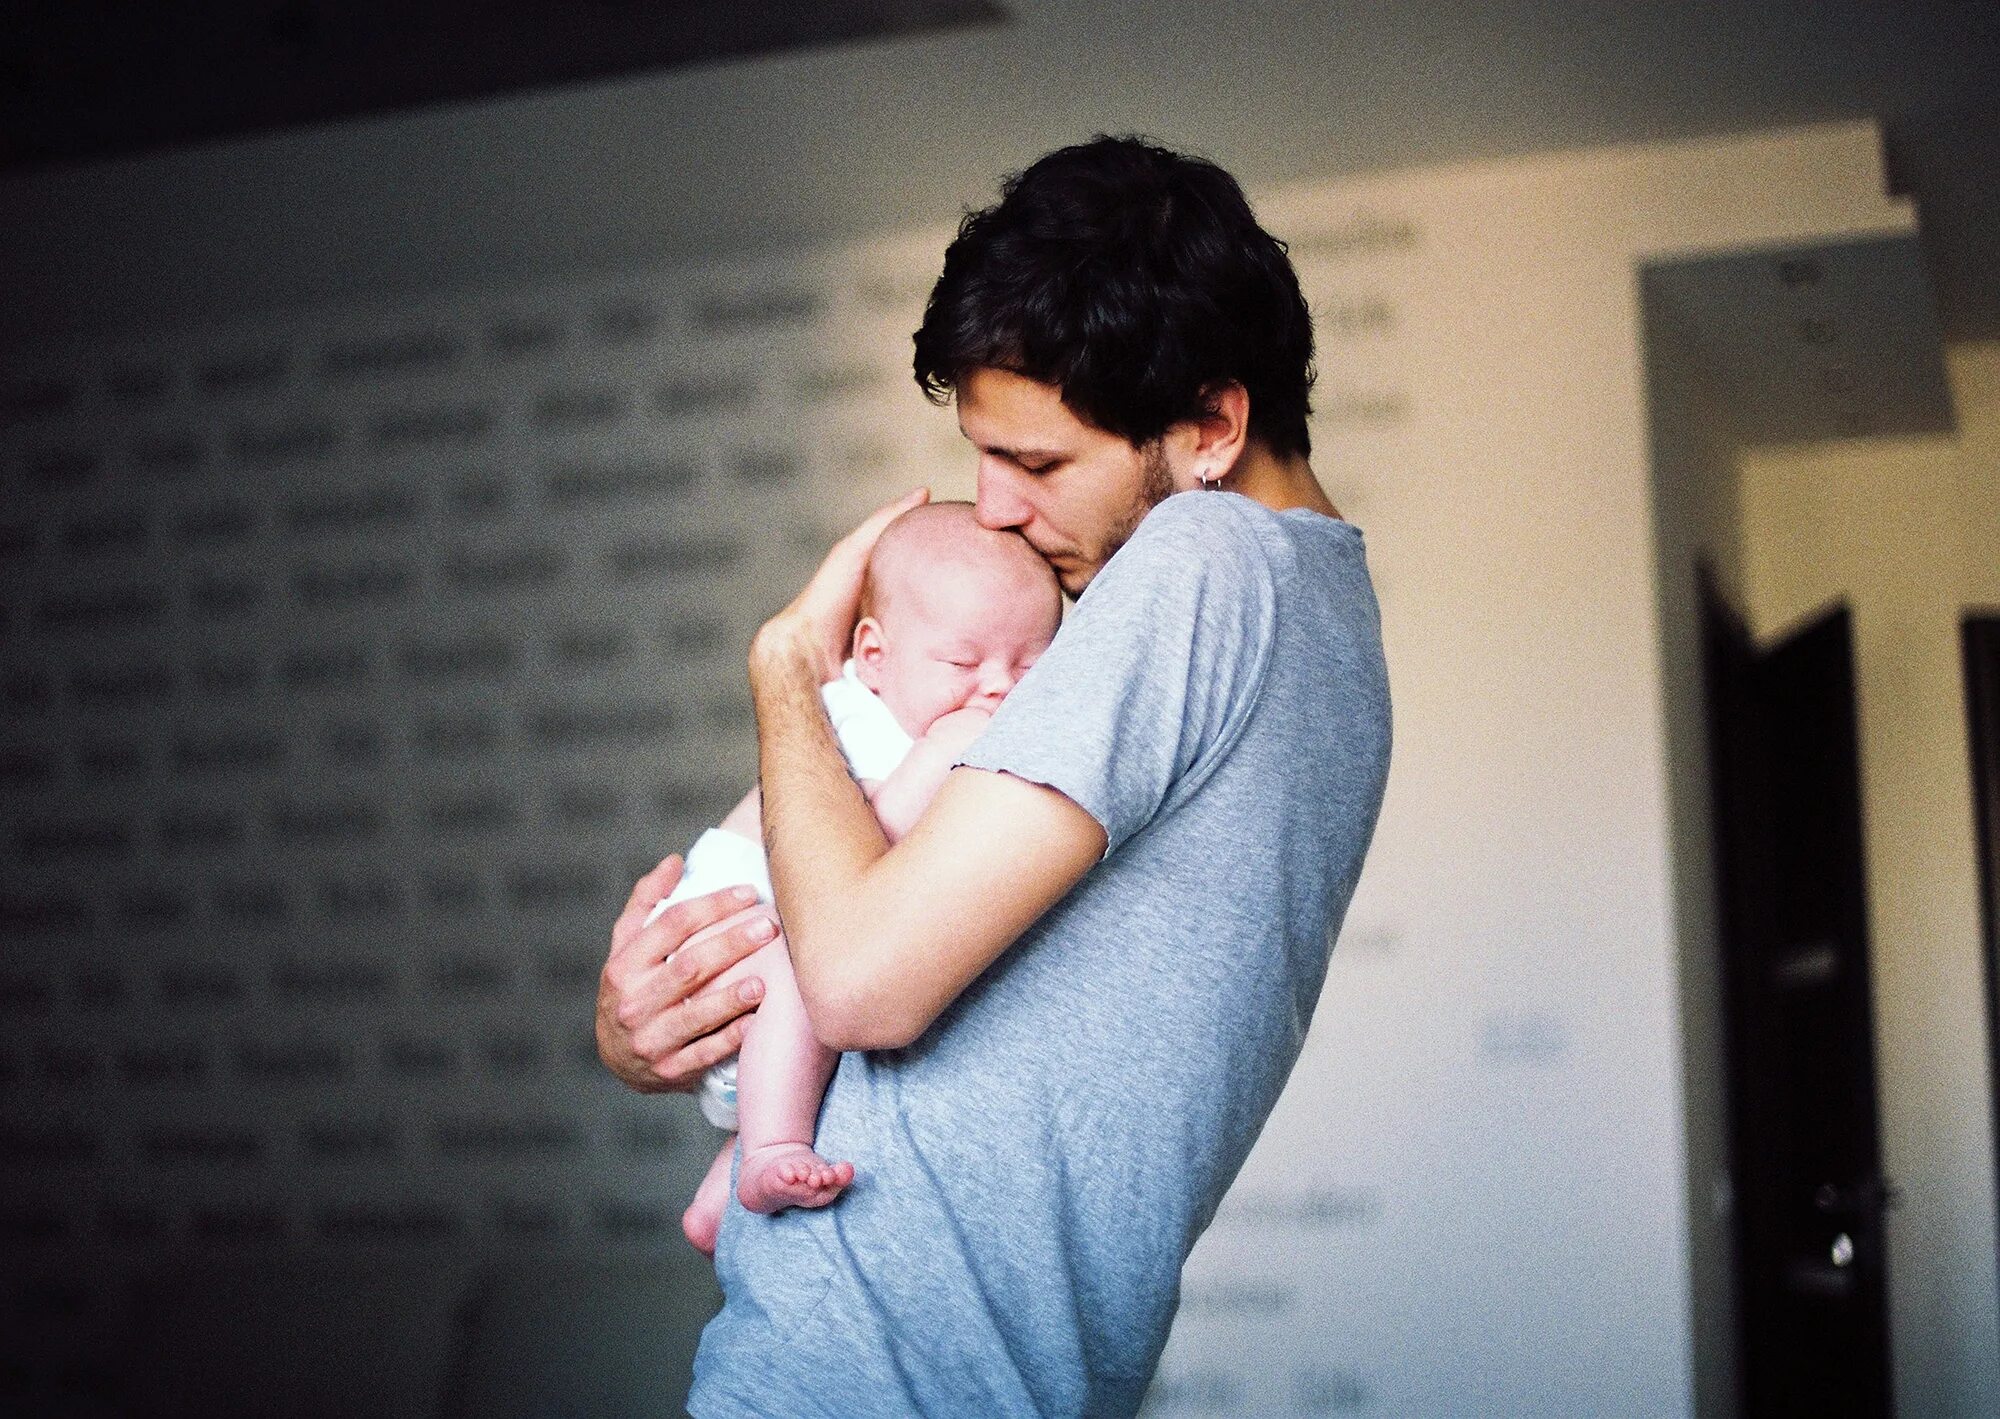 Мужчина держит ребенка. Мужчина с ребенком на руках. Ребенок на руках. Ужчига держит ребёнка в руках.